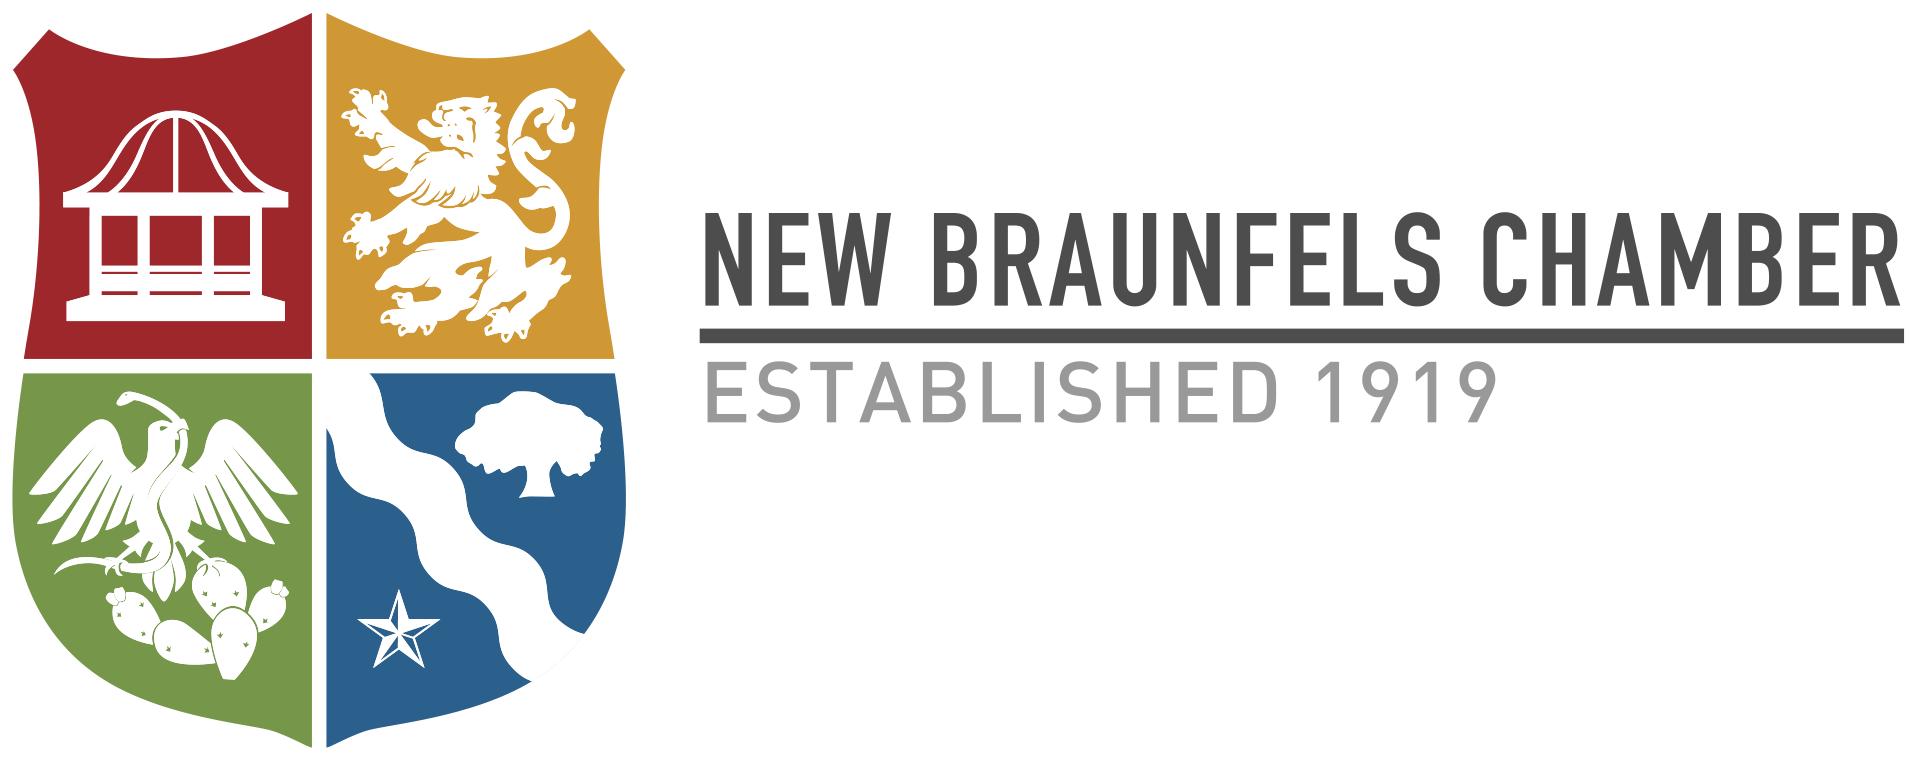 Chamber in new Braunfels.com